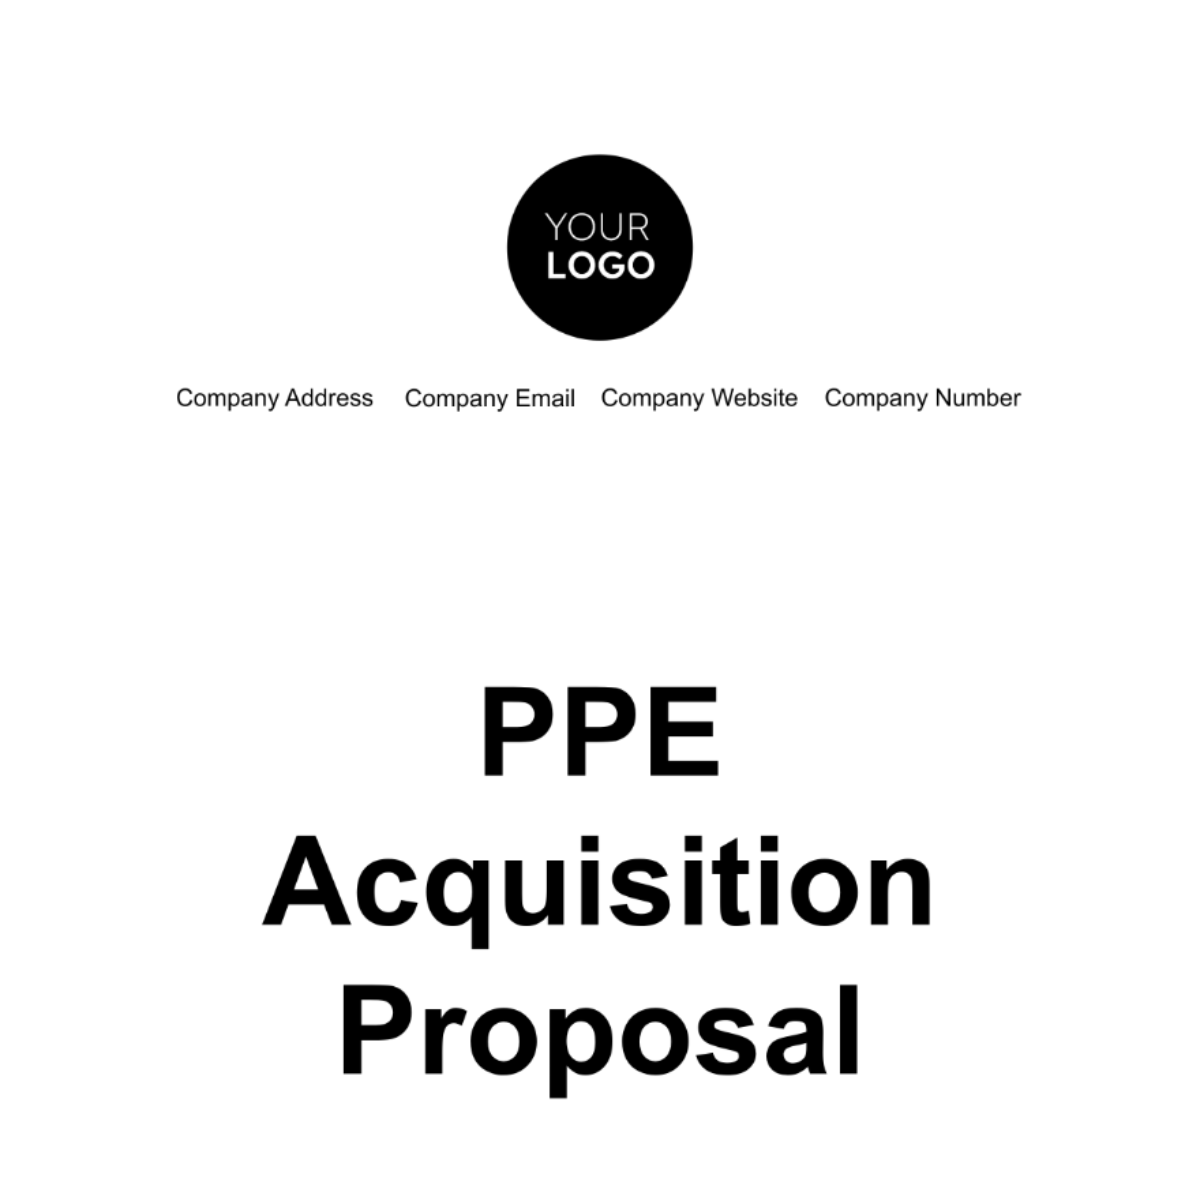 PPE Acquisition Proposal Template